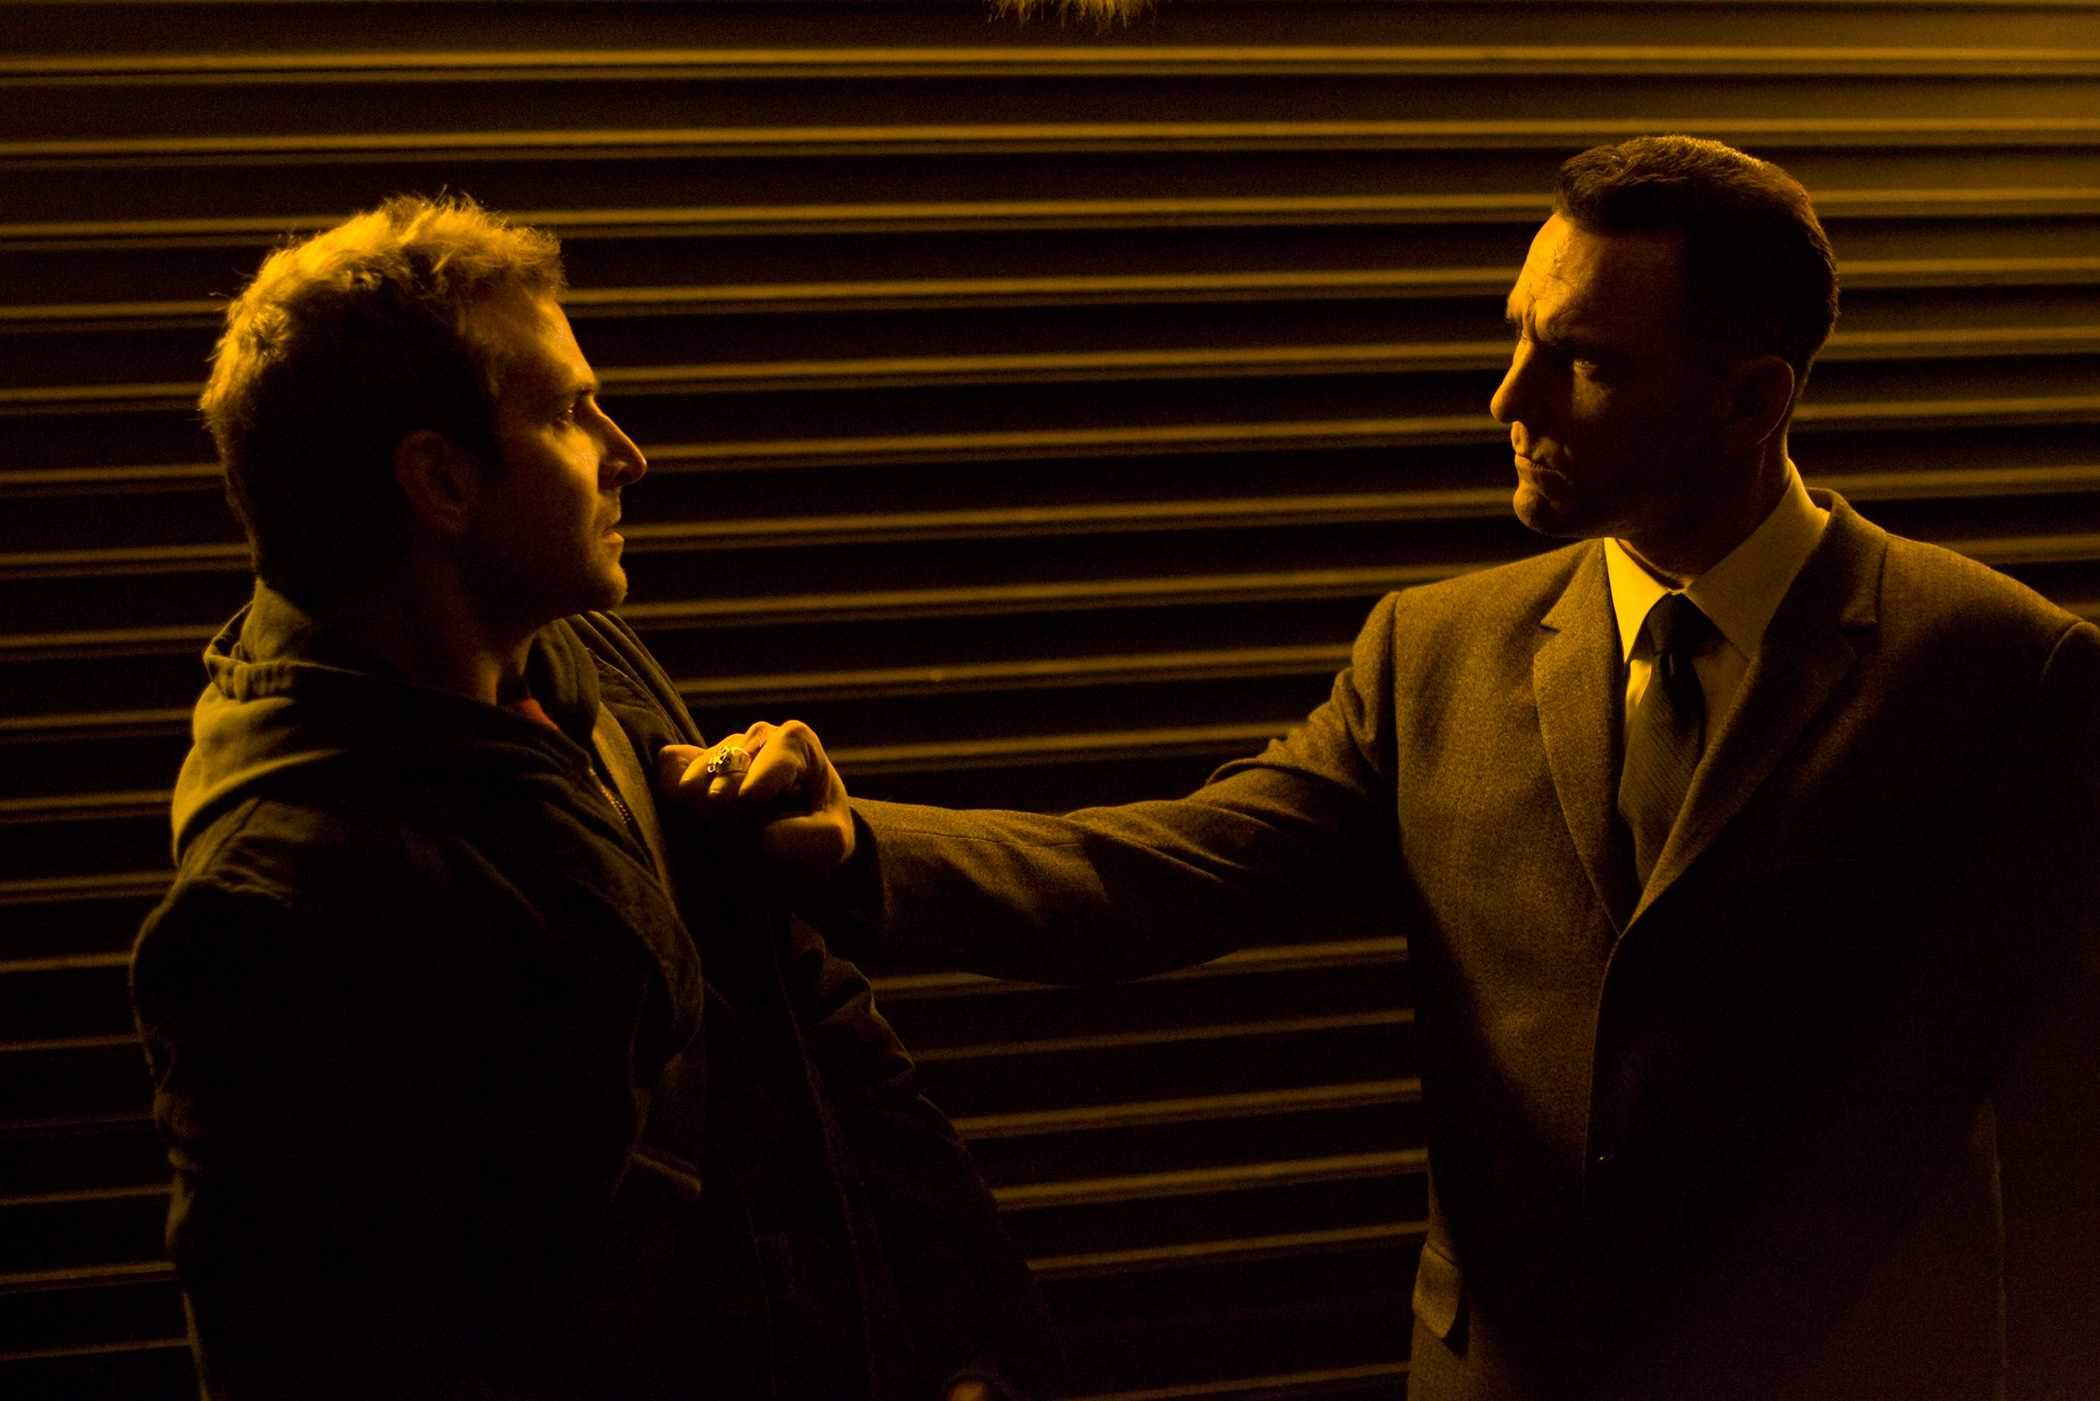 Leon (Bradley Cooper) and Mahogany (Vinnie Jones) in THE MIDNIGHT MEAT TRAIN (2008). Photo credit: Saeed Adyani.